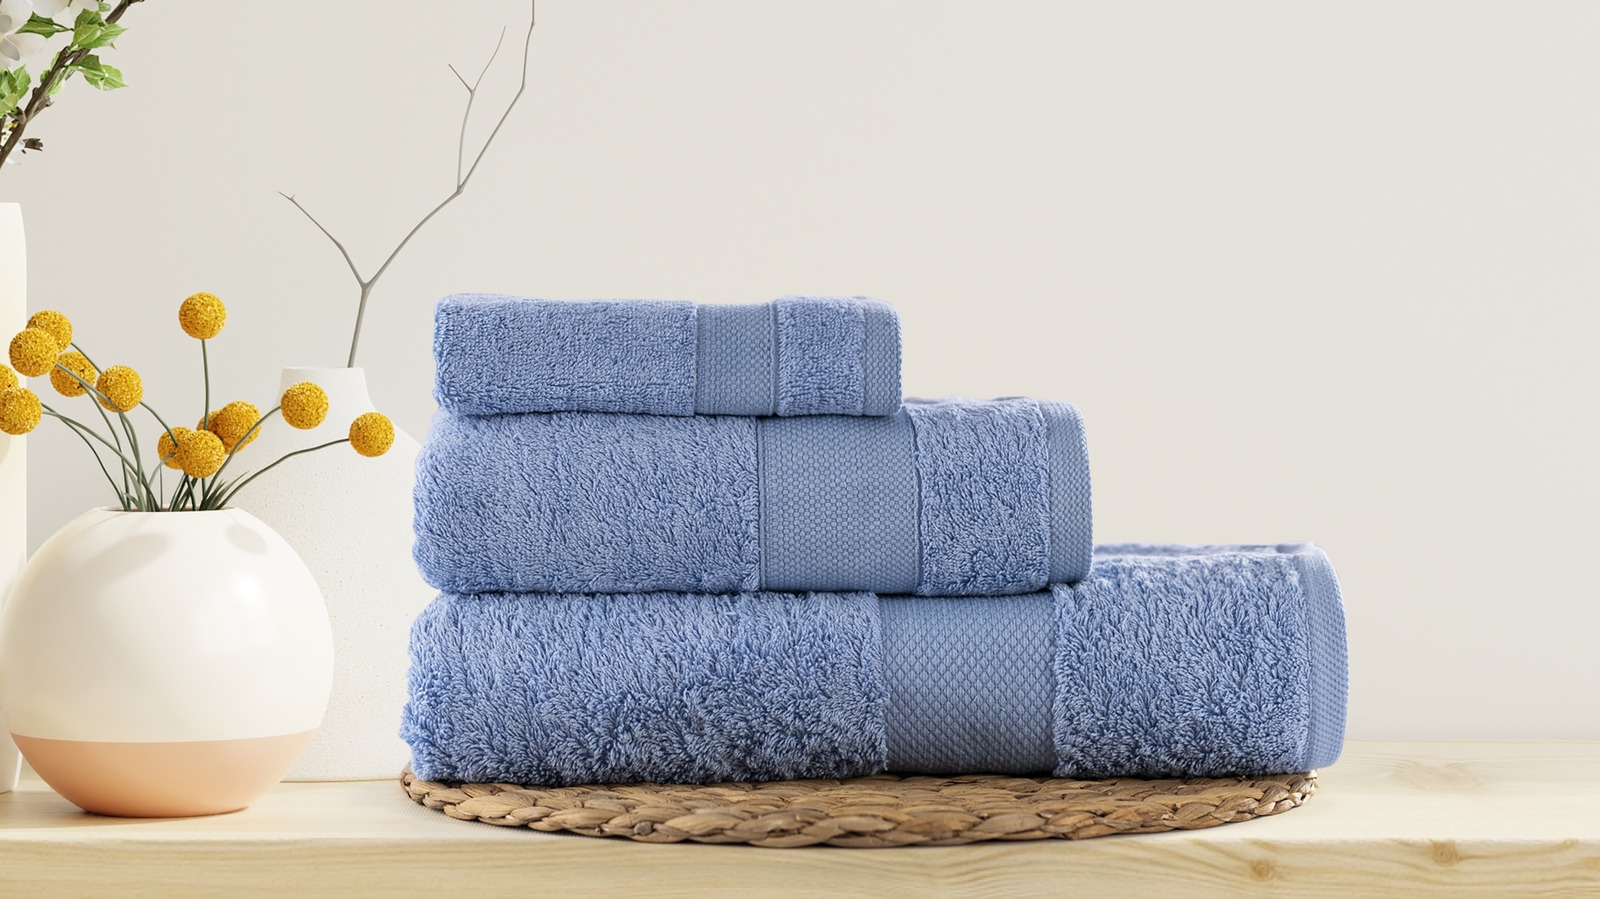 Заменить полотенца. Стирка полотенец. Полотенца на столе в ванной. Стирка полотенца Shutterstock. Fluffy Towel.